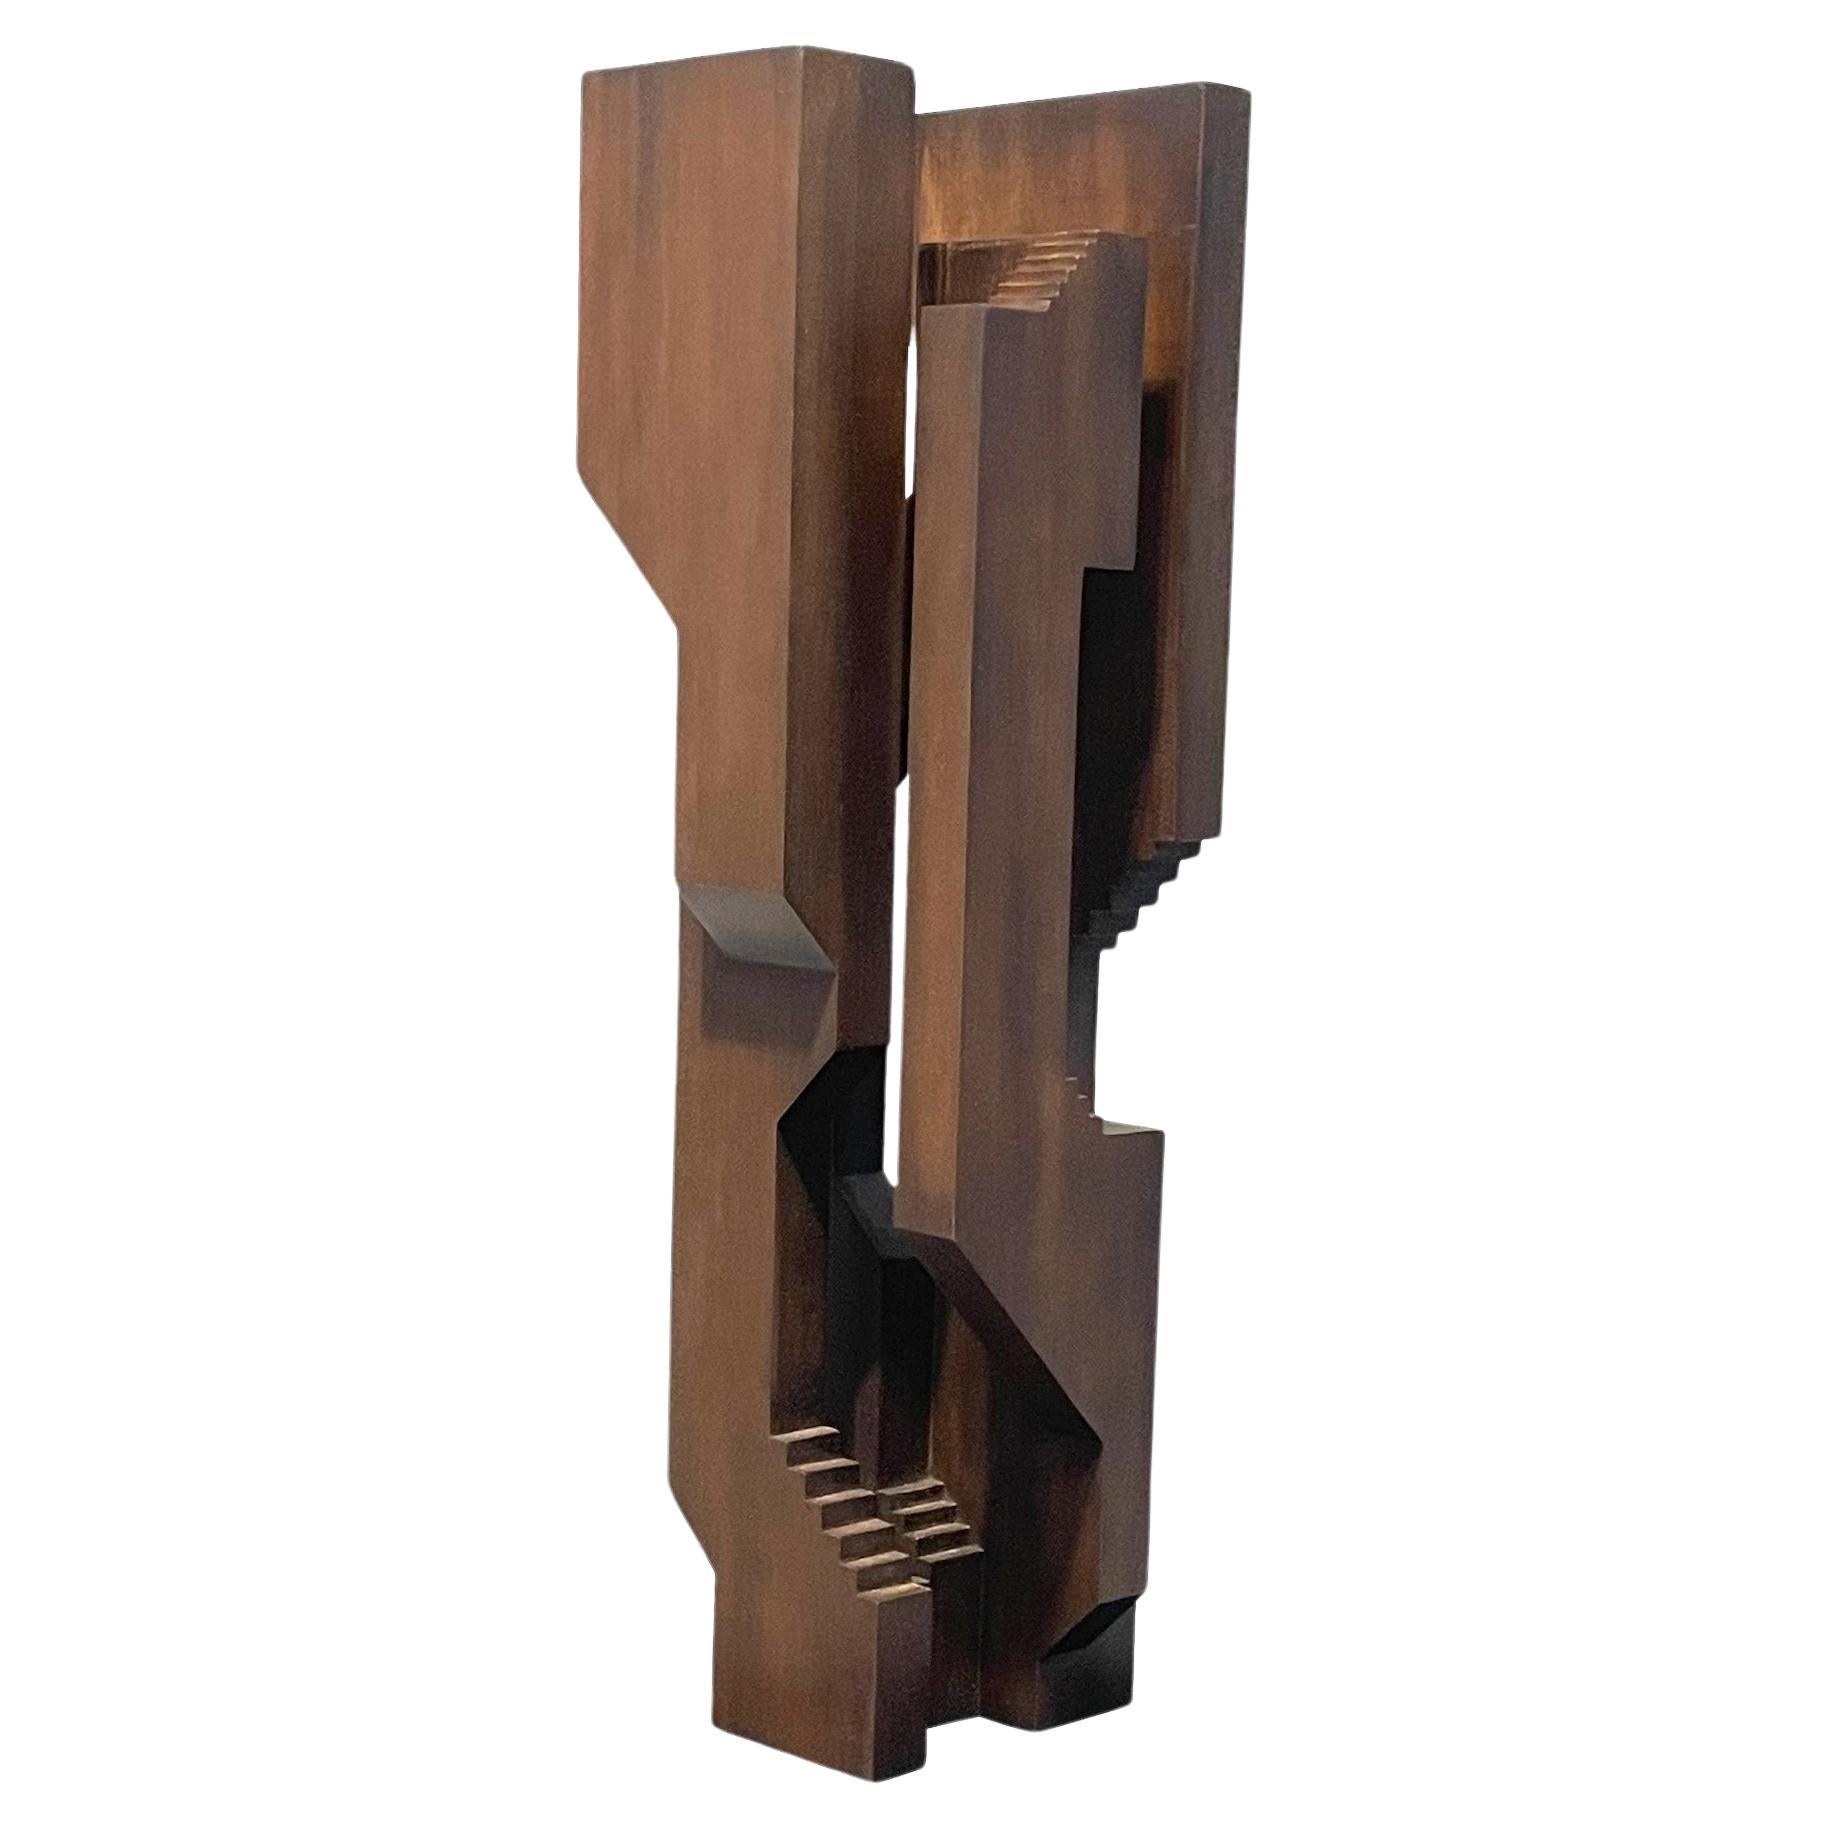 Espressobraune abstrakte Skulptur aus Holz von David Umemoto, Kanada, Contemporary 